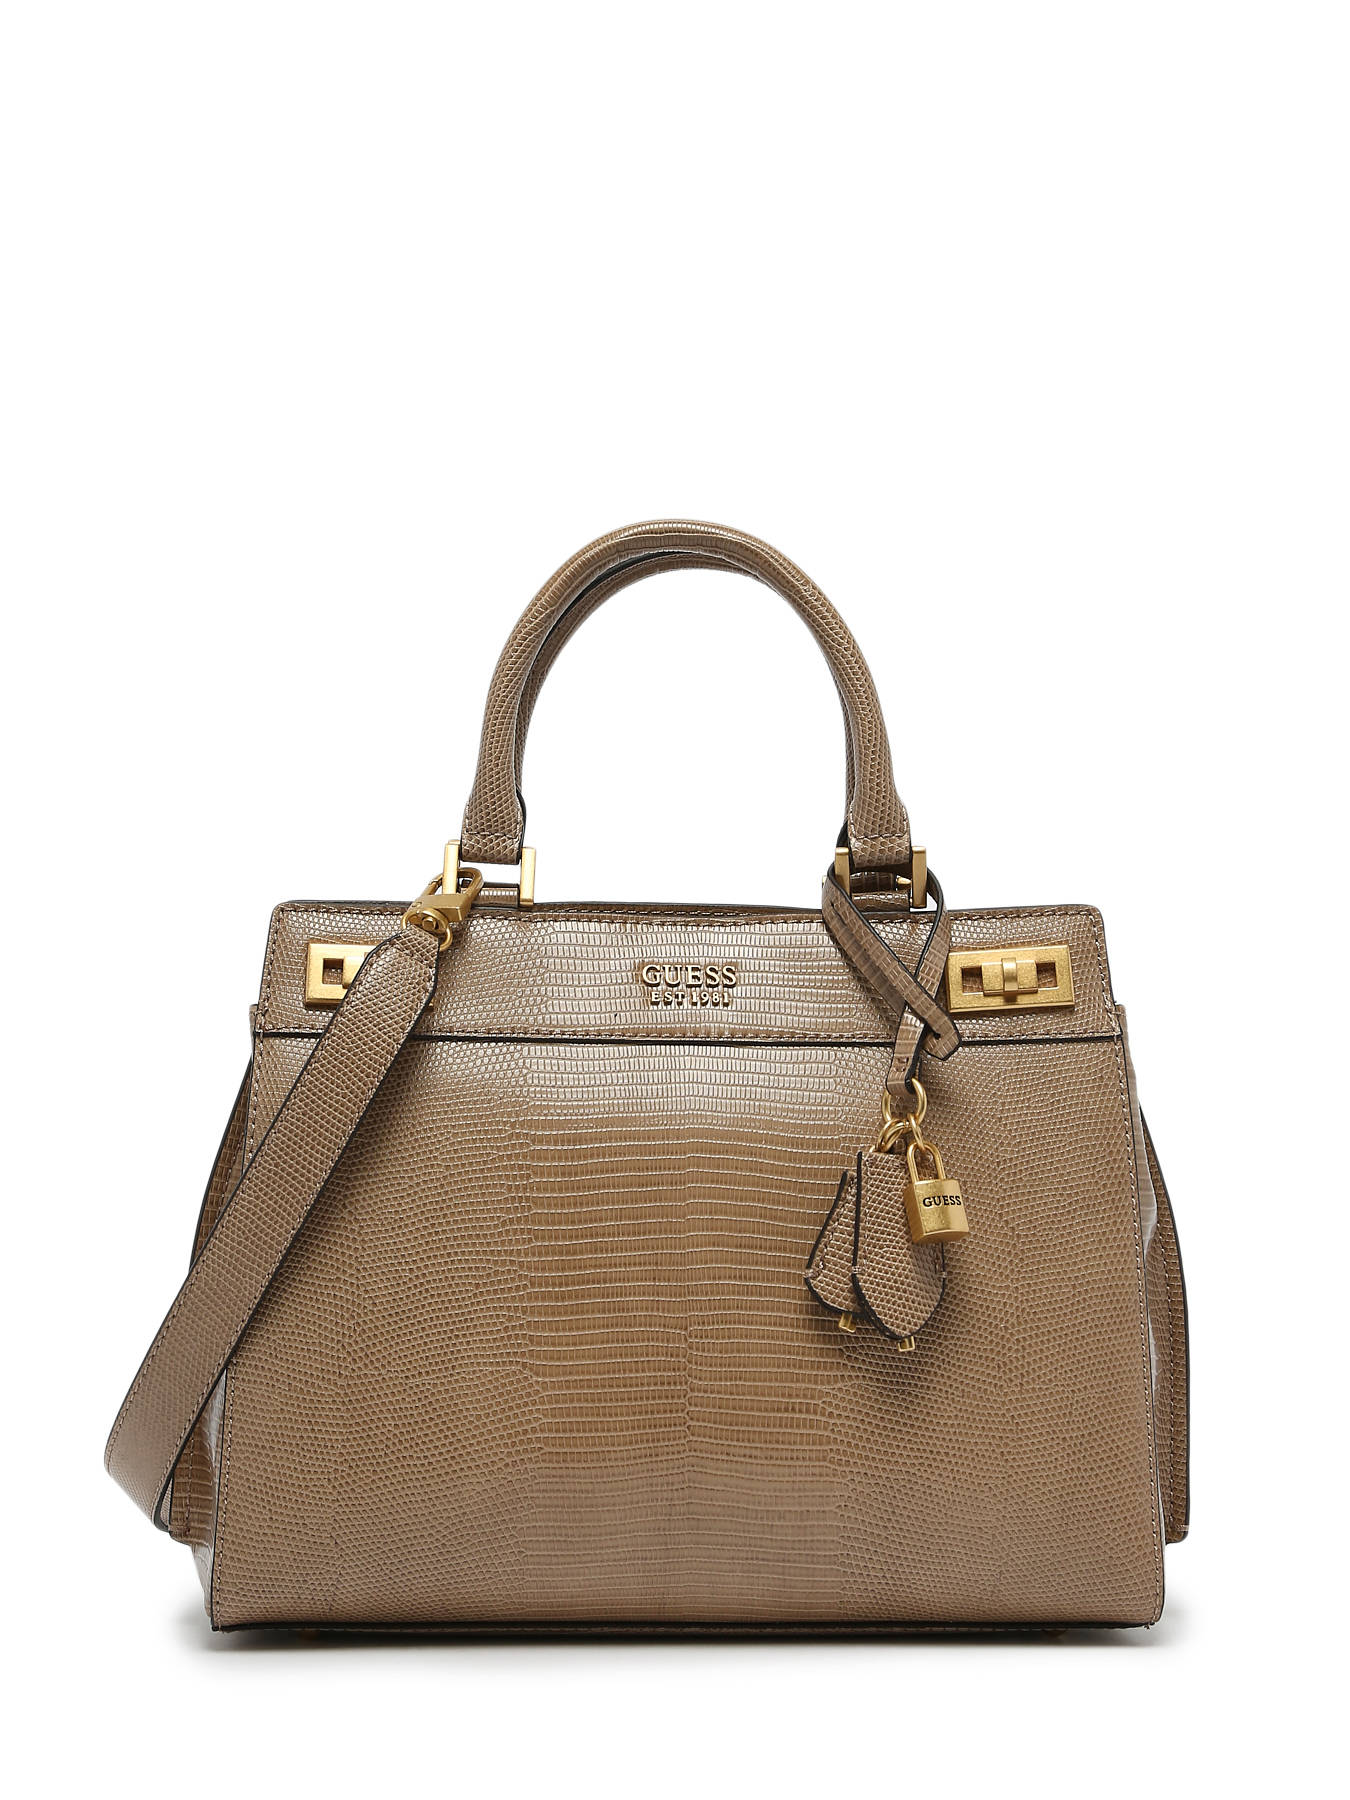 Guess Women's Katey Luxury Satchel Handbag Black